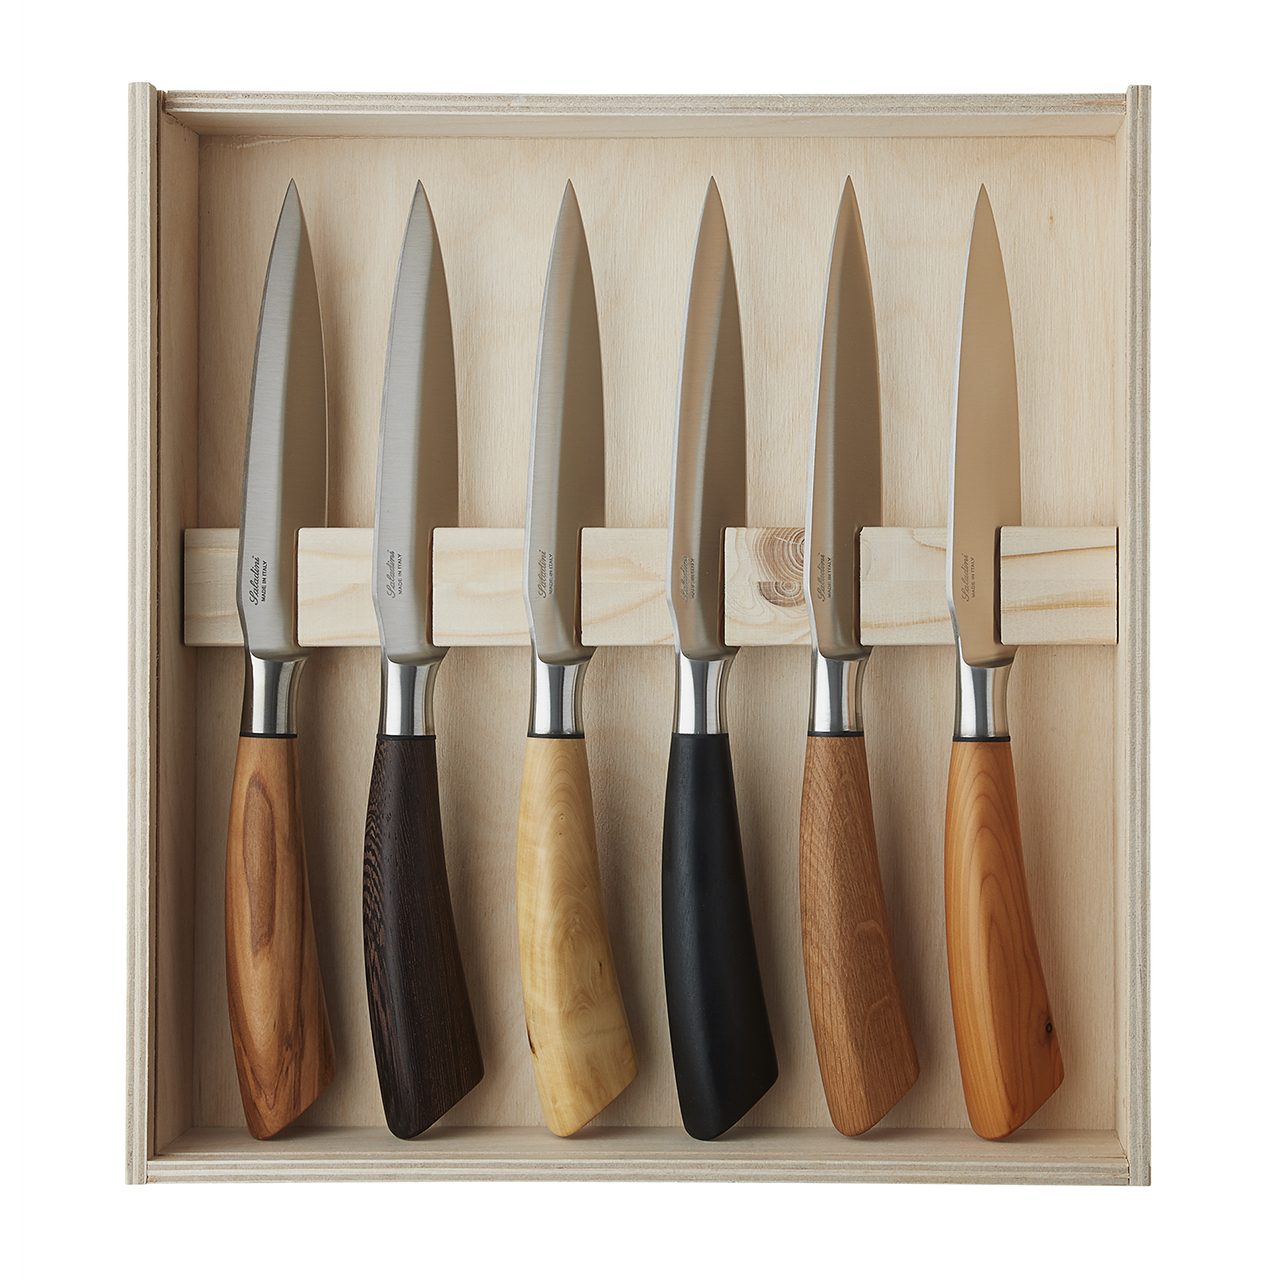 Store Saladini steakknive 27 cm i trækasse, Oliviers & Co